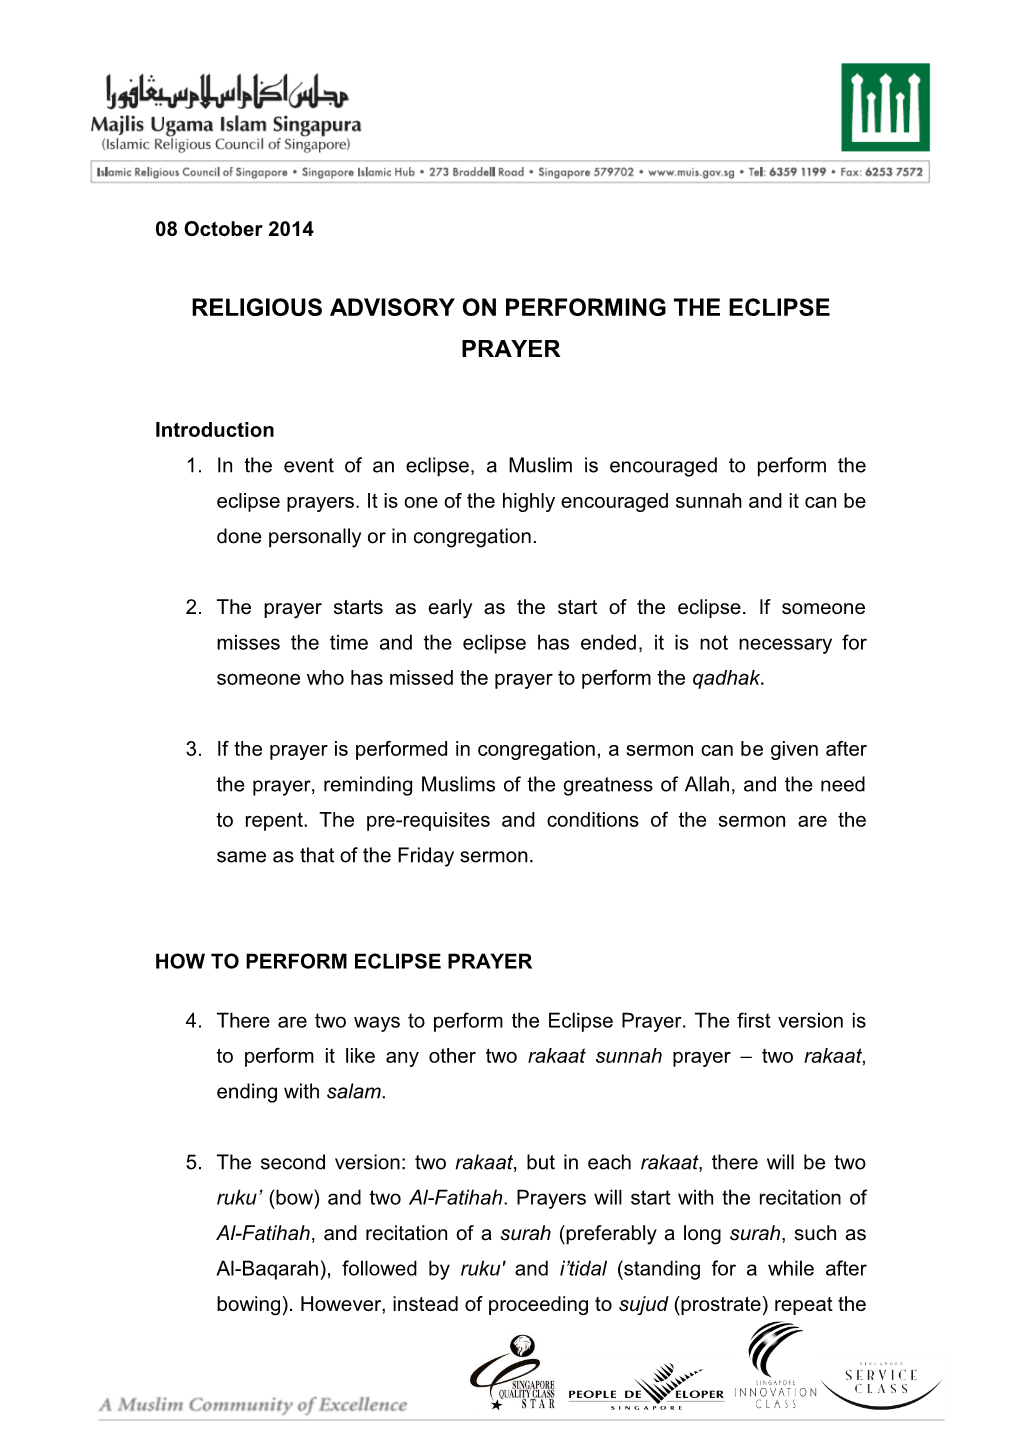 Religious Advisory on Performing the Eclipse Prayer